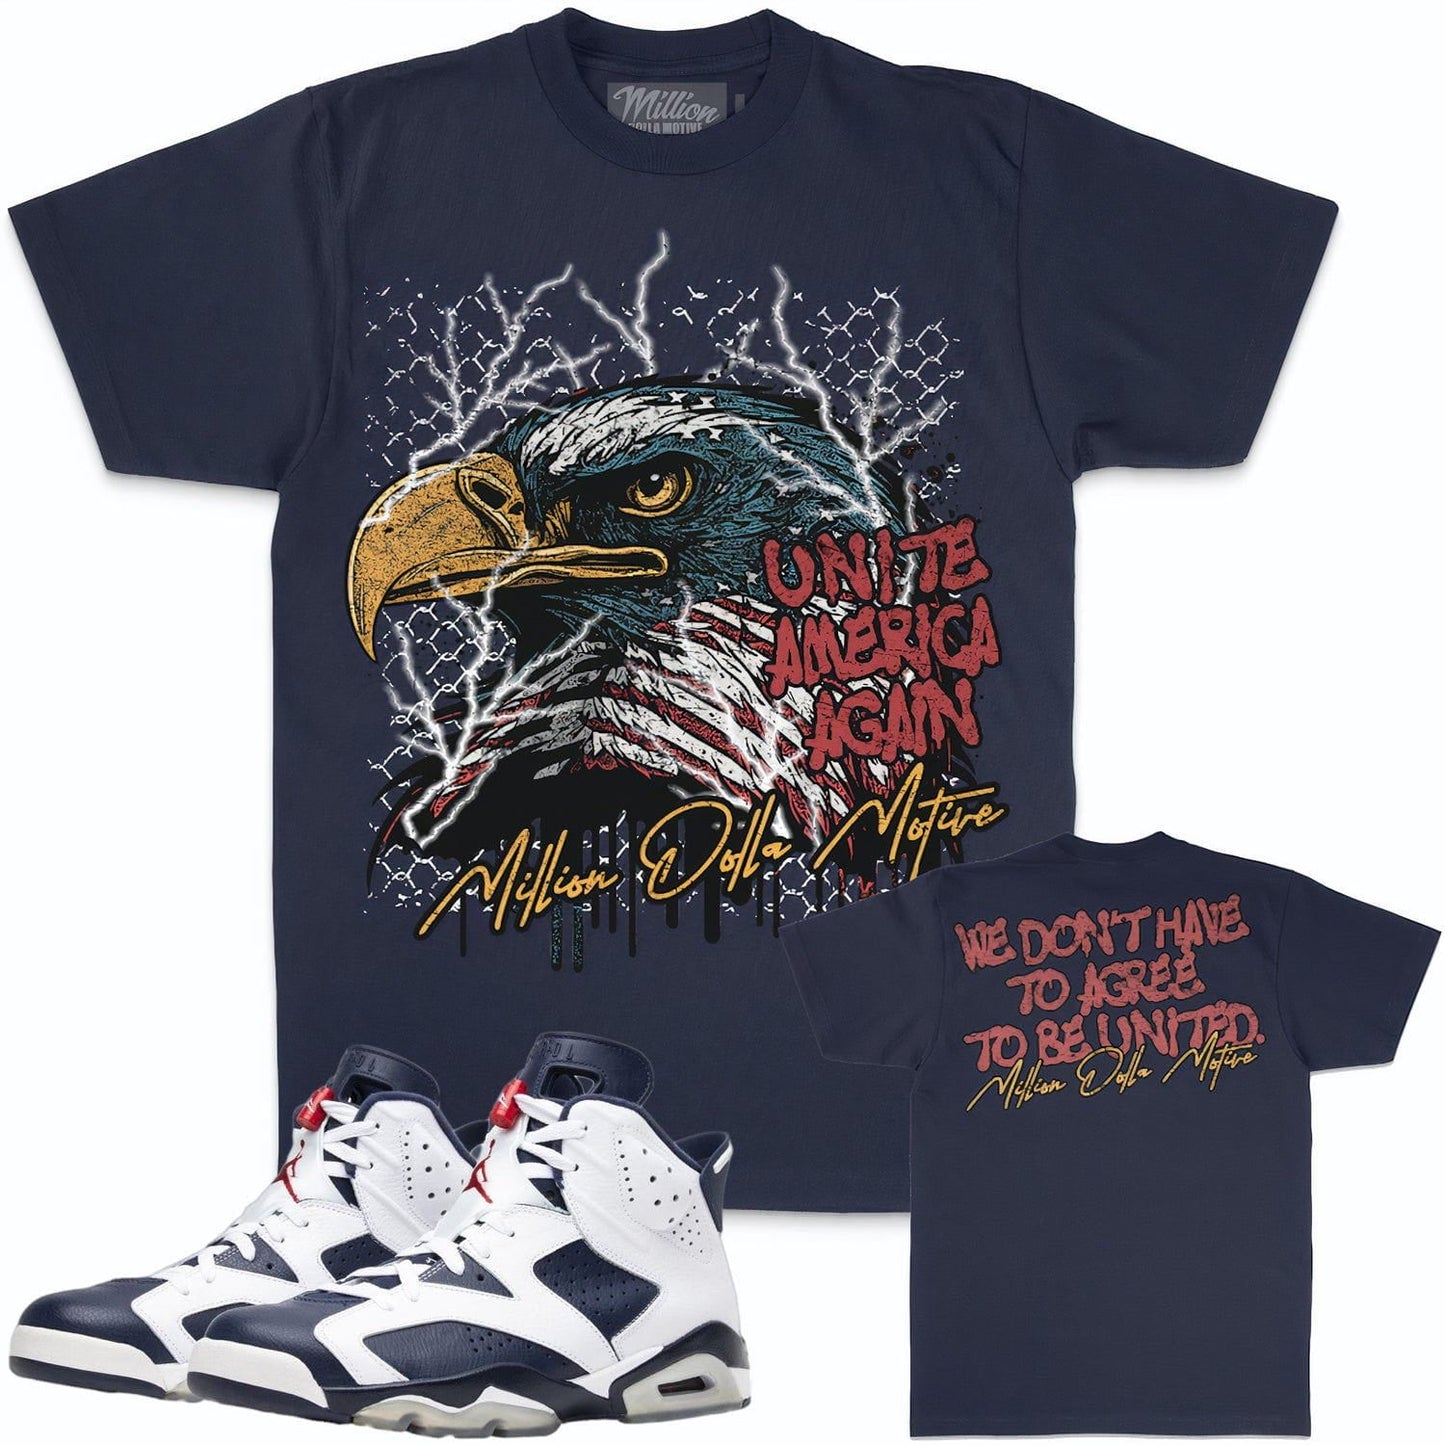 Olympic 6s Shirt - Jordan 6 Olympic 6s Sneaker Tees - Unite America